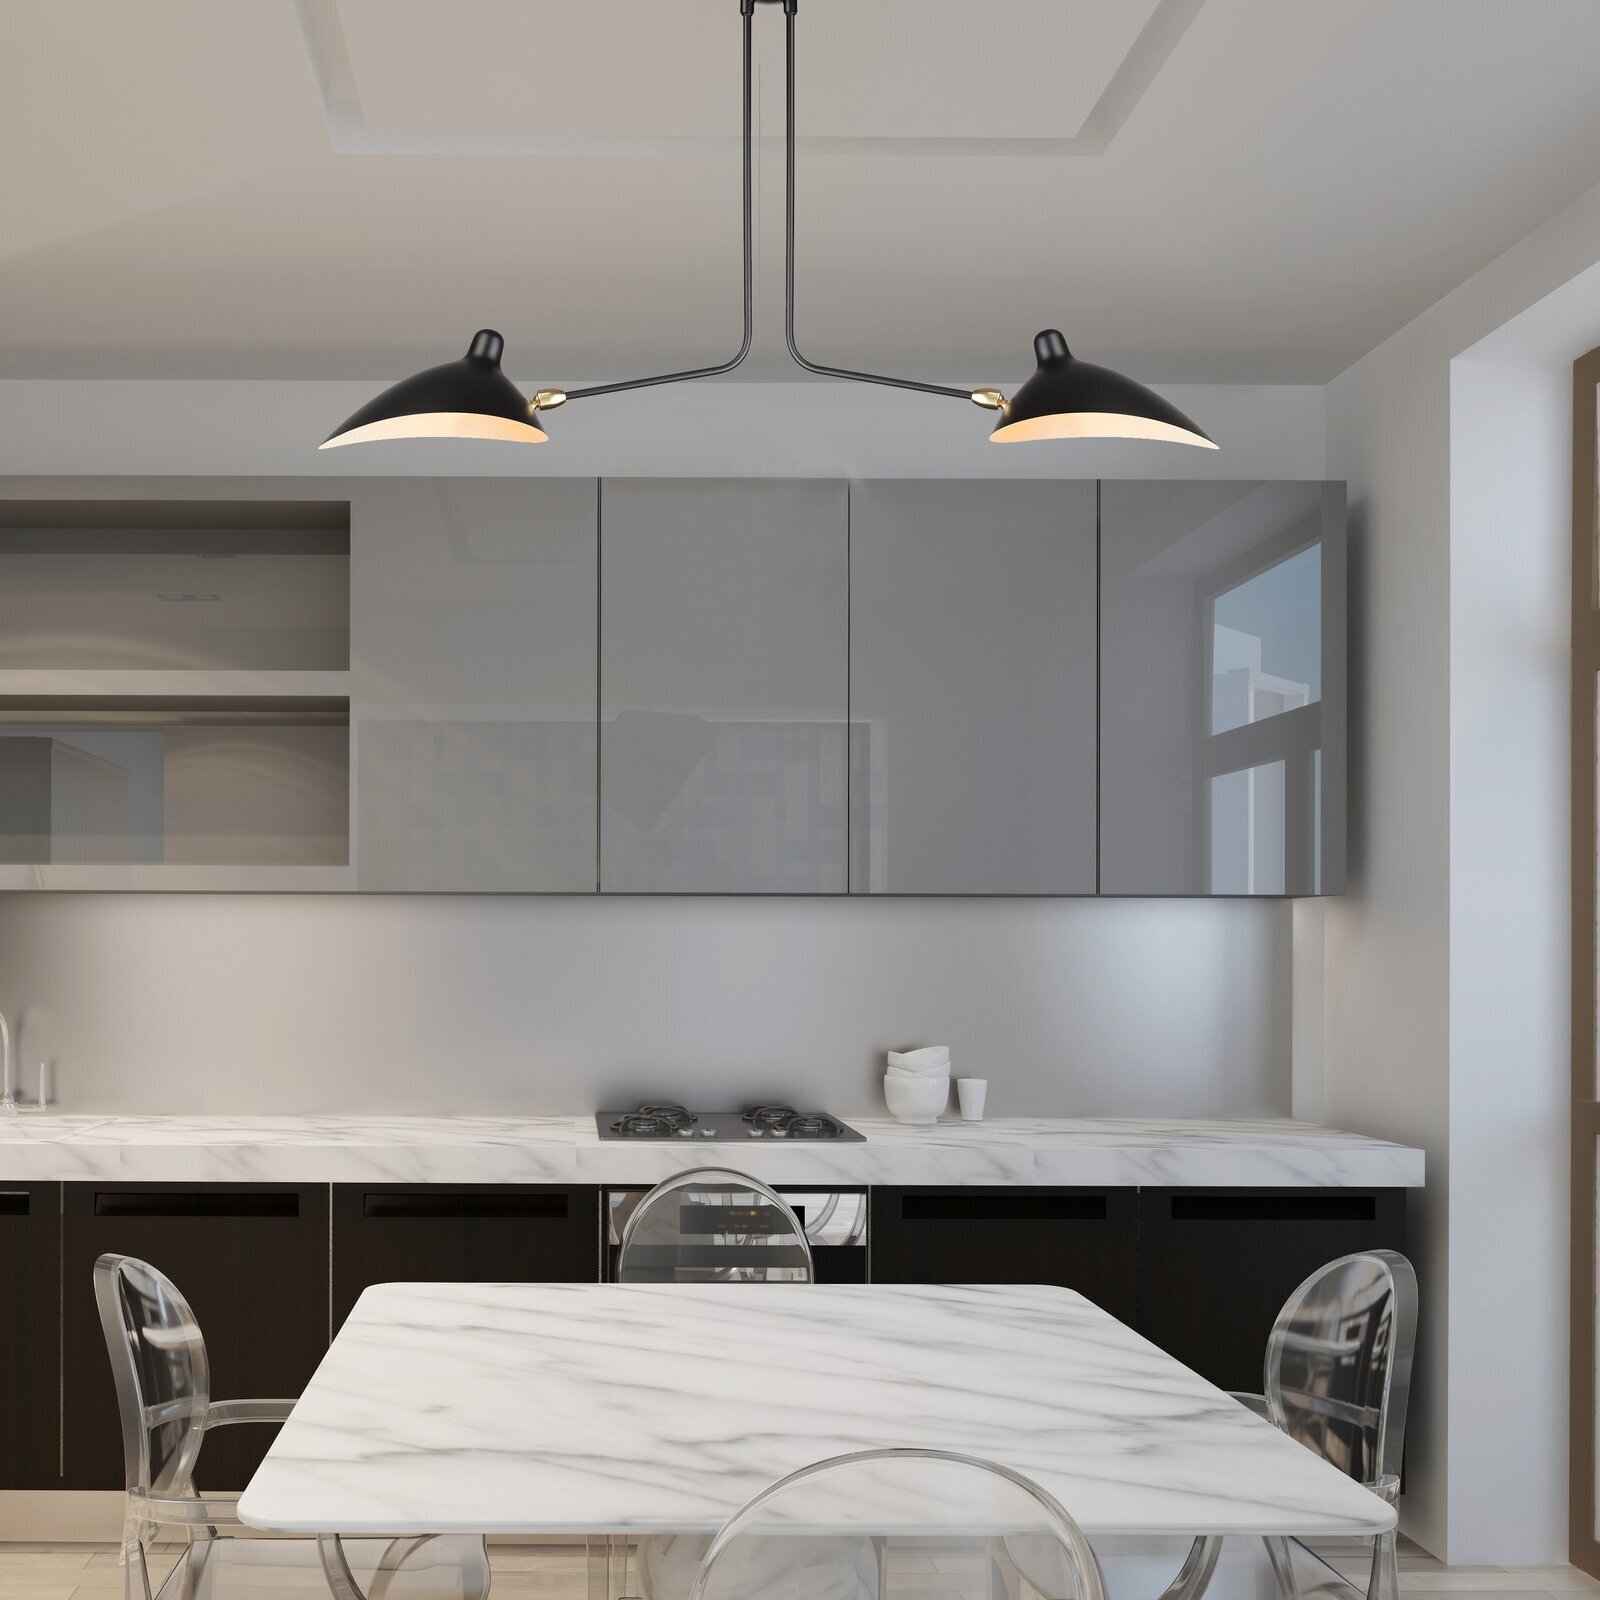 Angular shaped Kitchen Pendant Lights